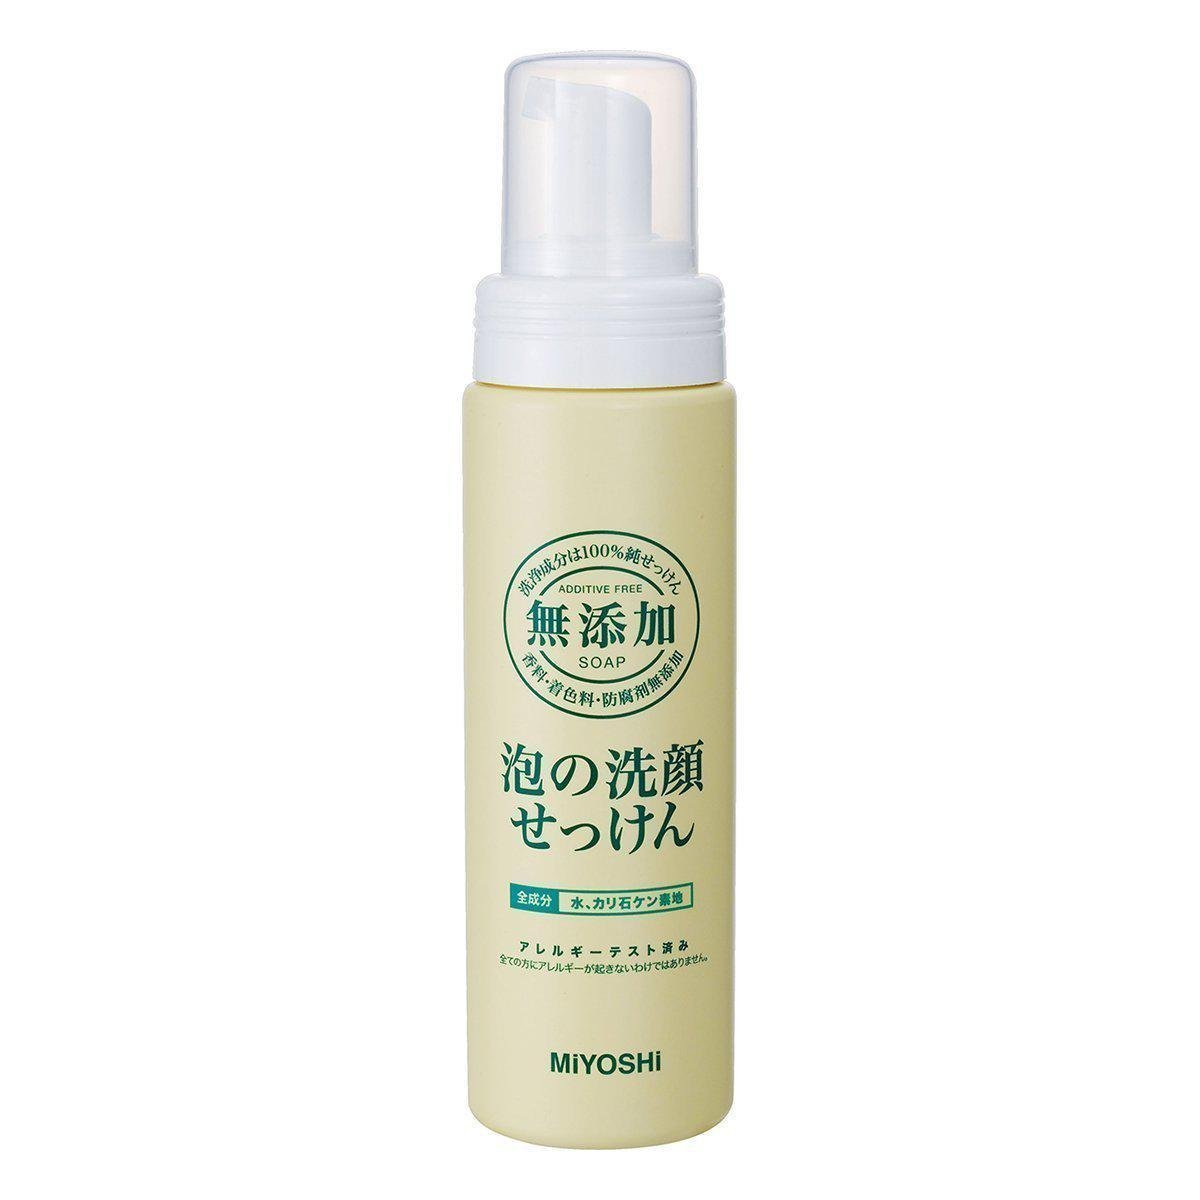 Miyoshi Soap Facial Foaming Wash Additive-Free Pump Bottle 200ml